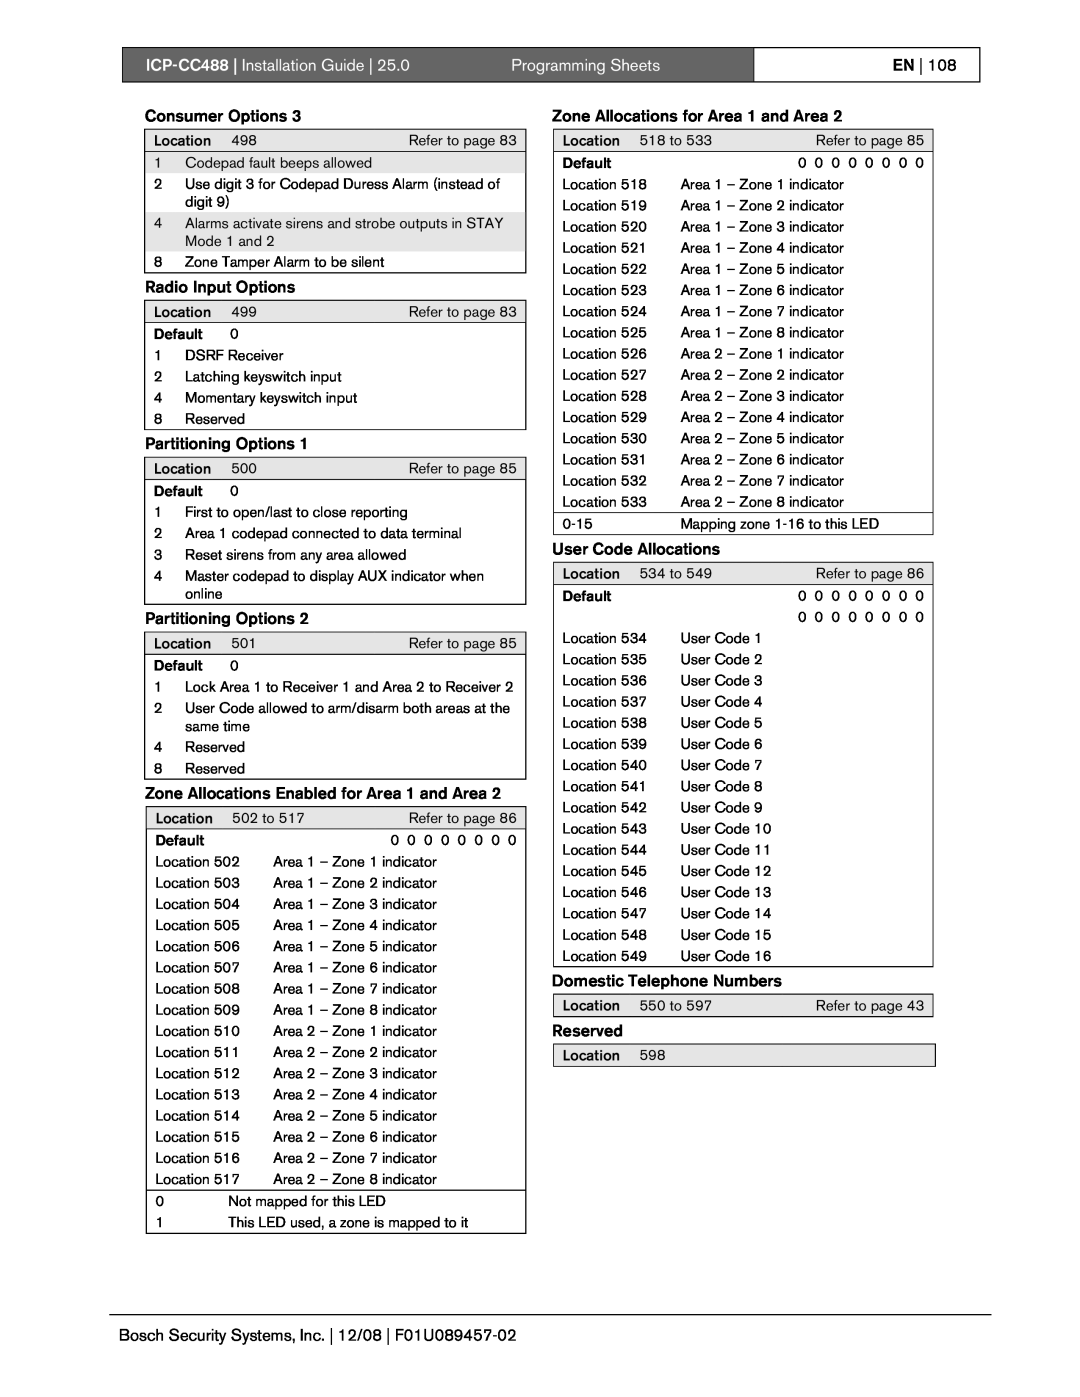 Bosch Appliances manual ICP-CC488| Installation Guide, Programming Sheets, En 